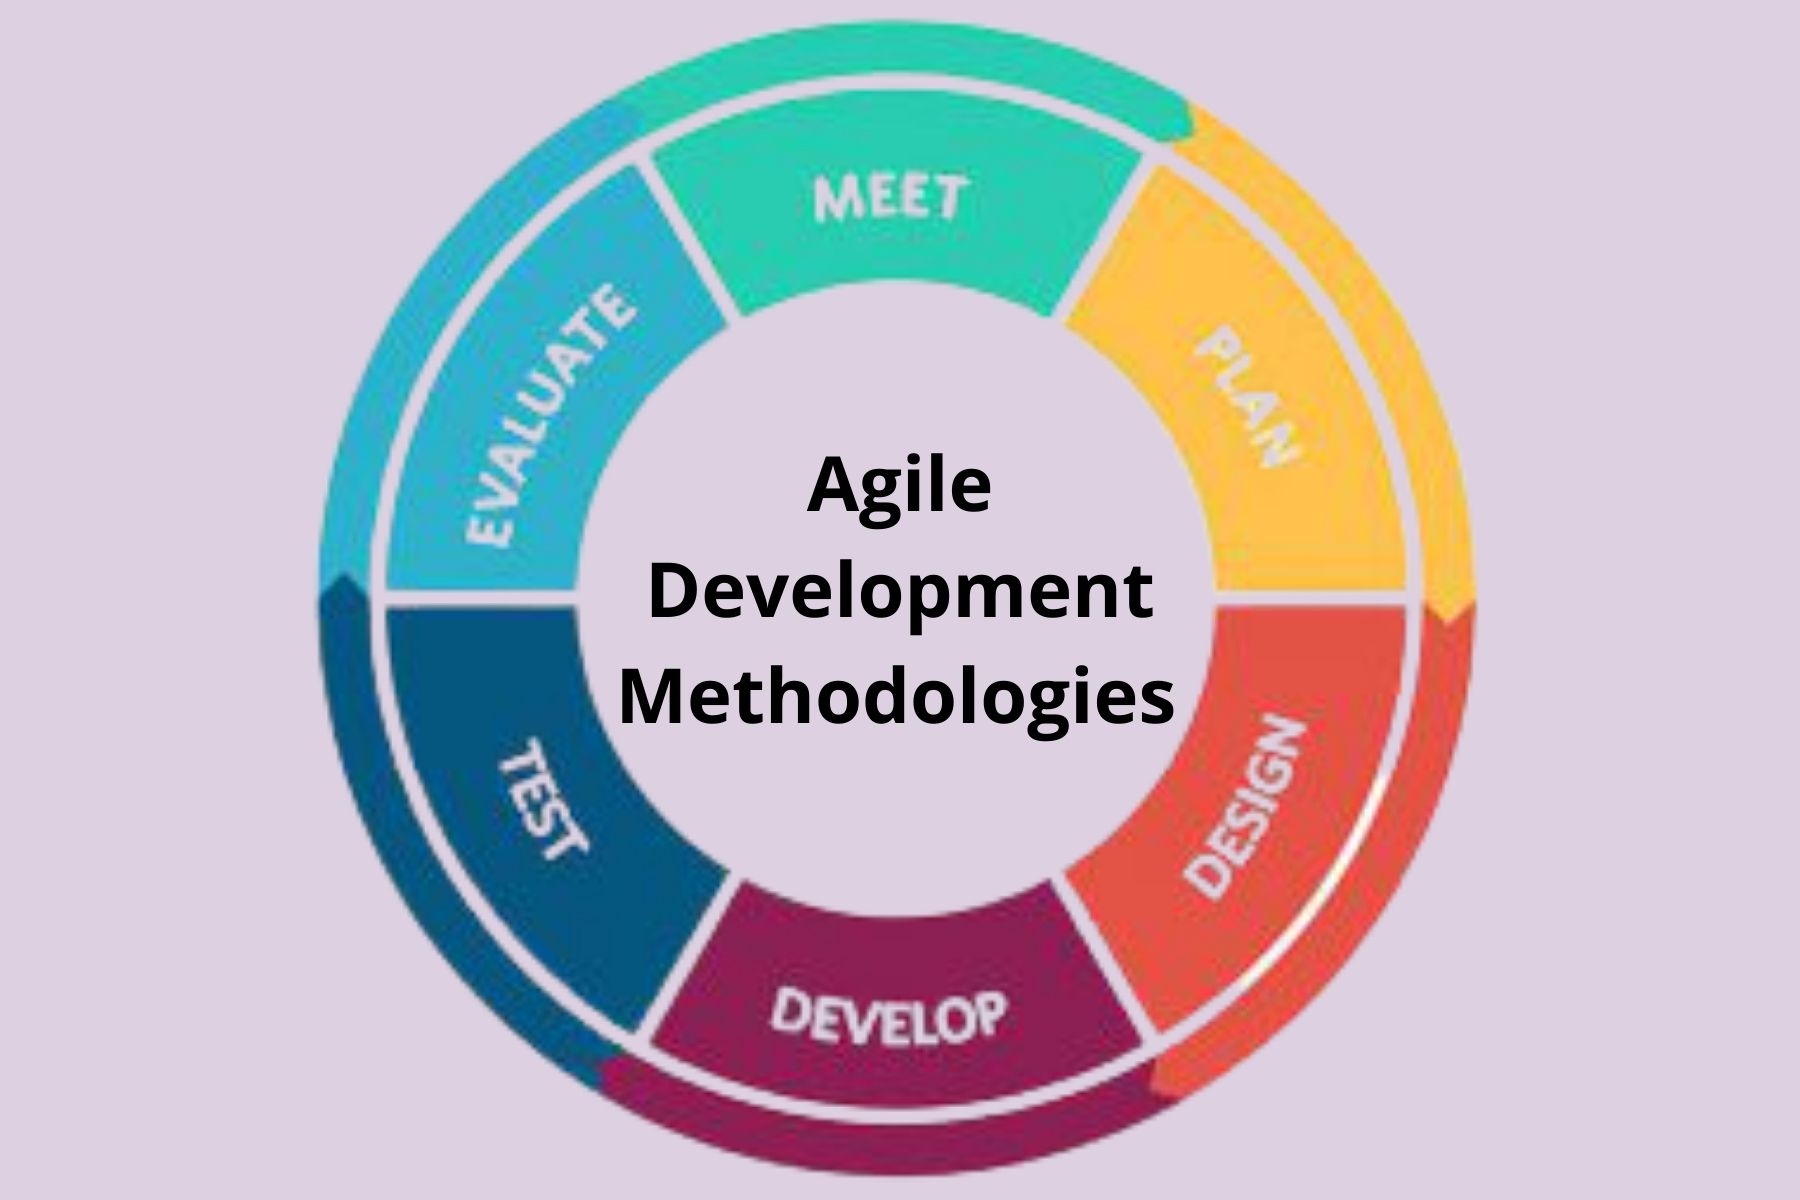 Agile Development Methodologies